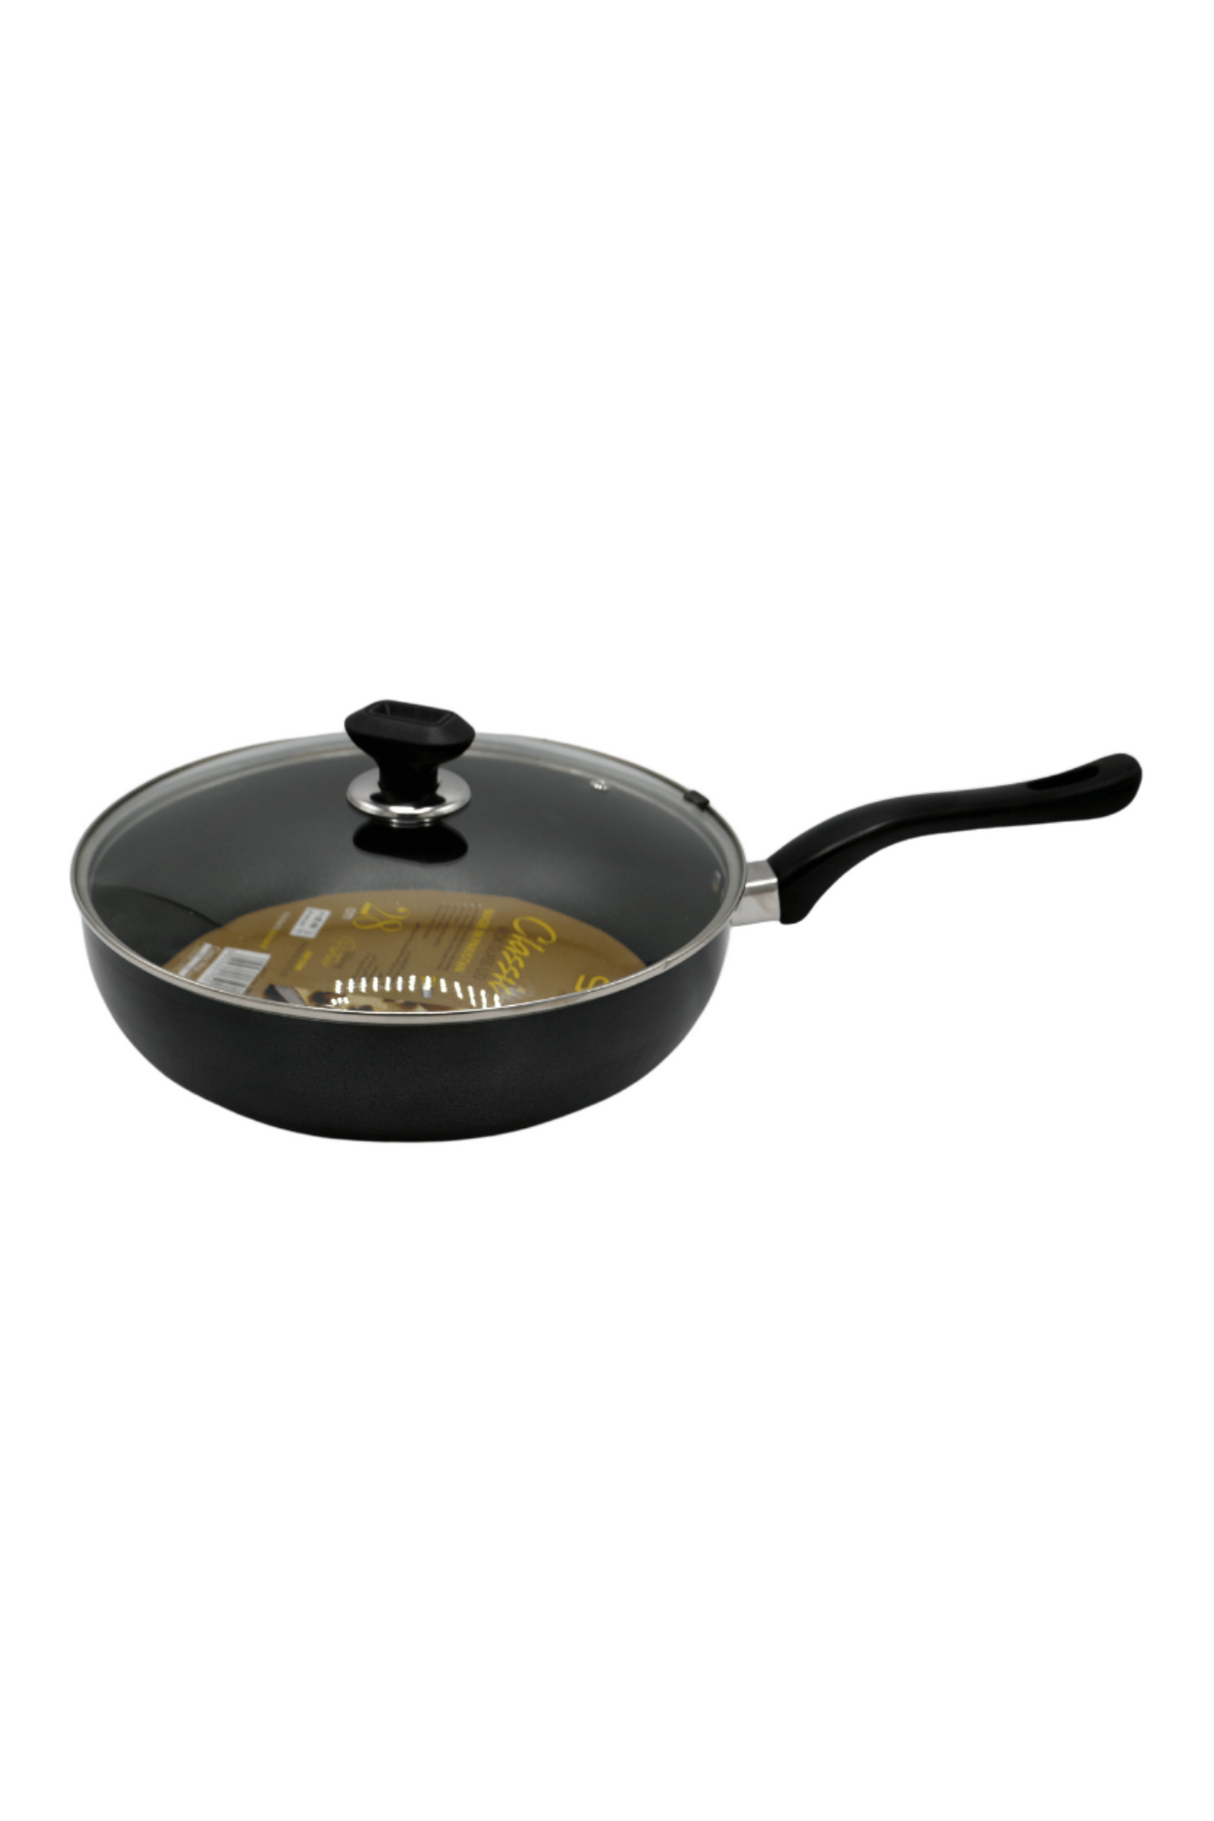 snx ns classic wok 28cm 50136